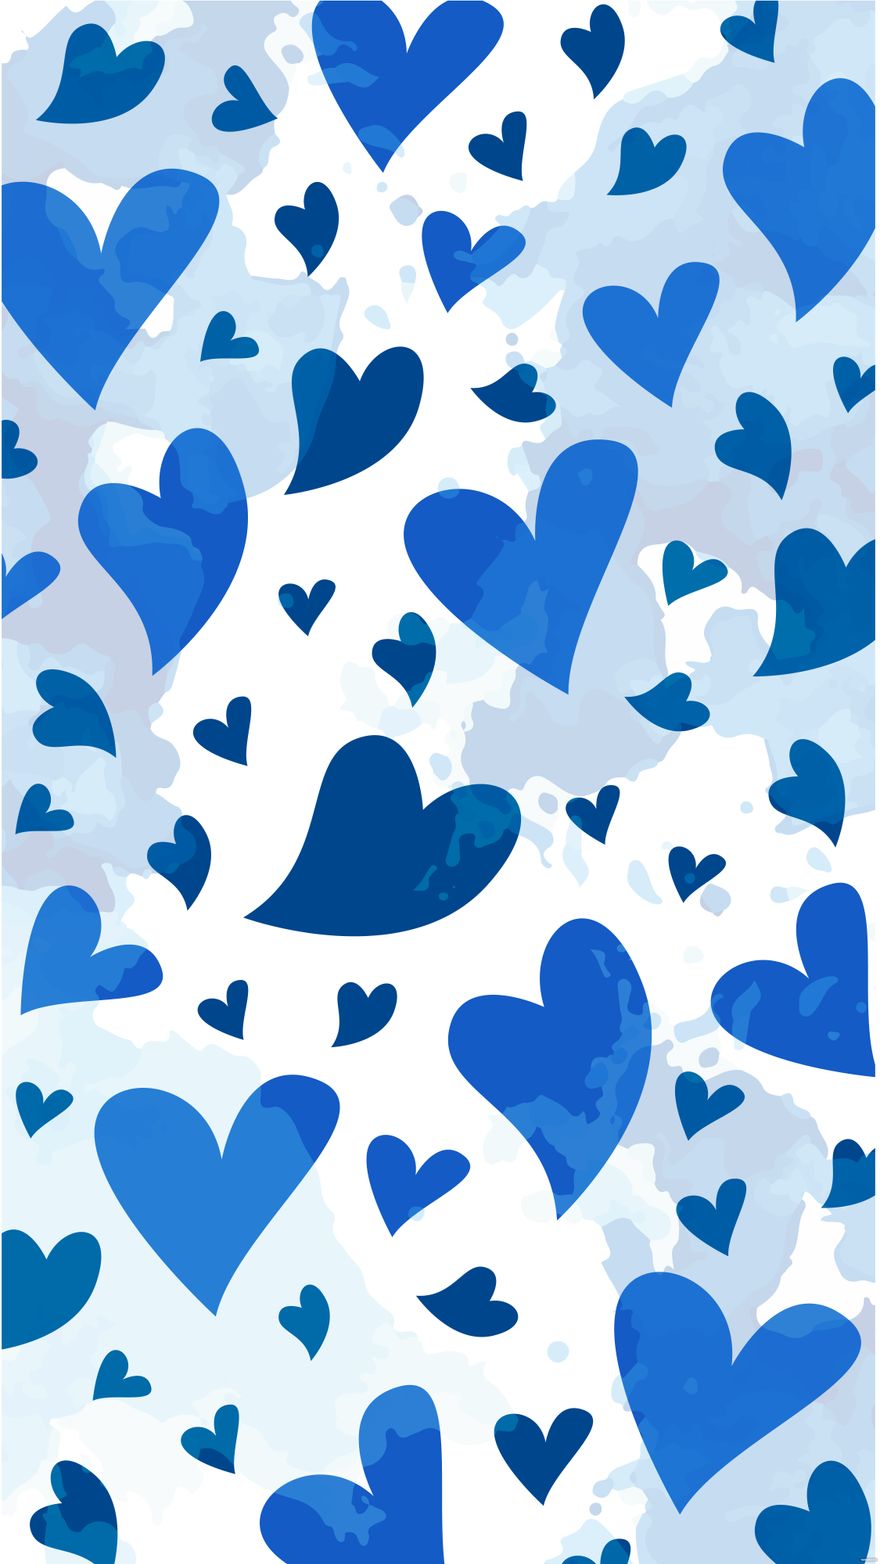 Free Watercolor Blue Heart Background - EPS, Illustrator, JPG, SVG ...